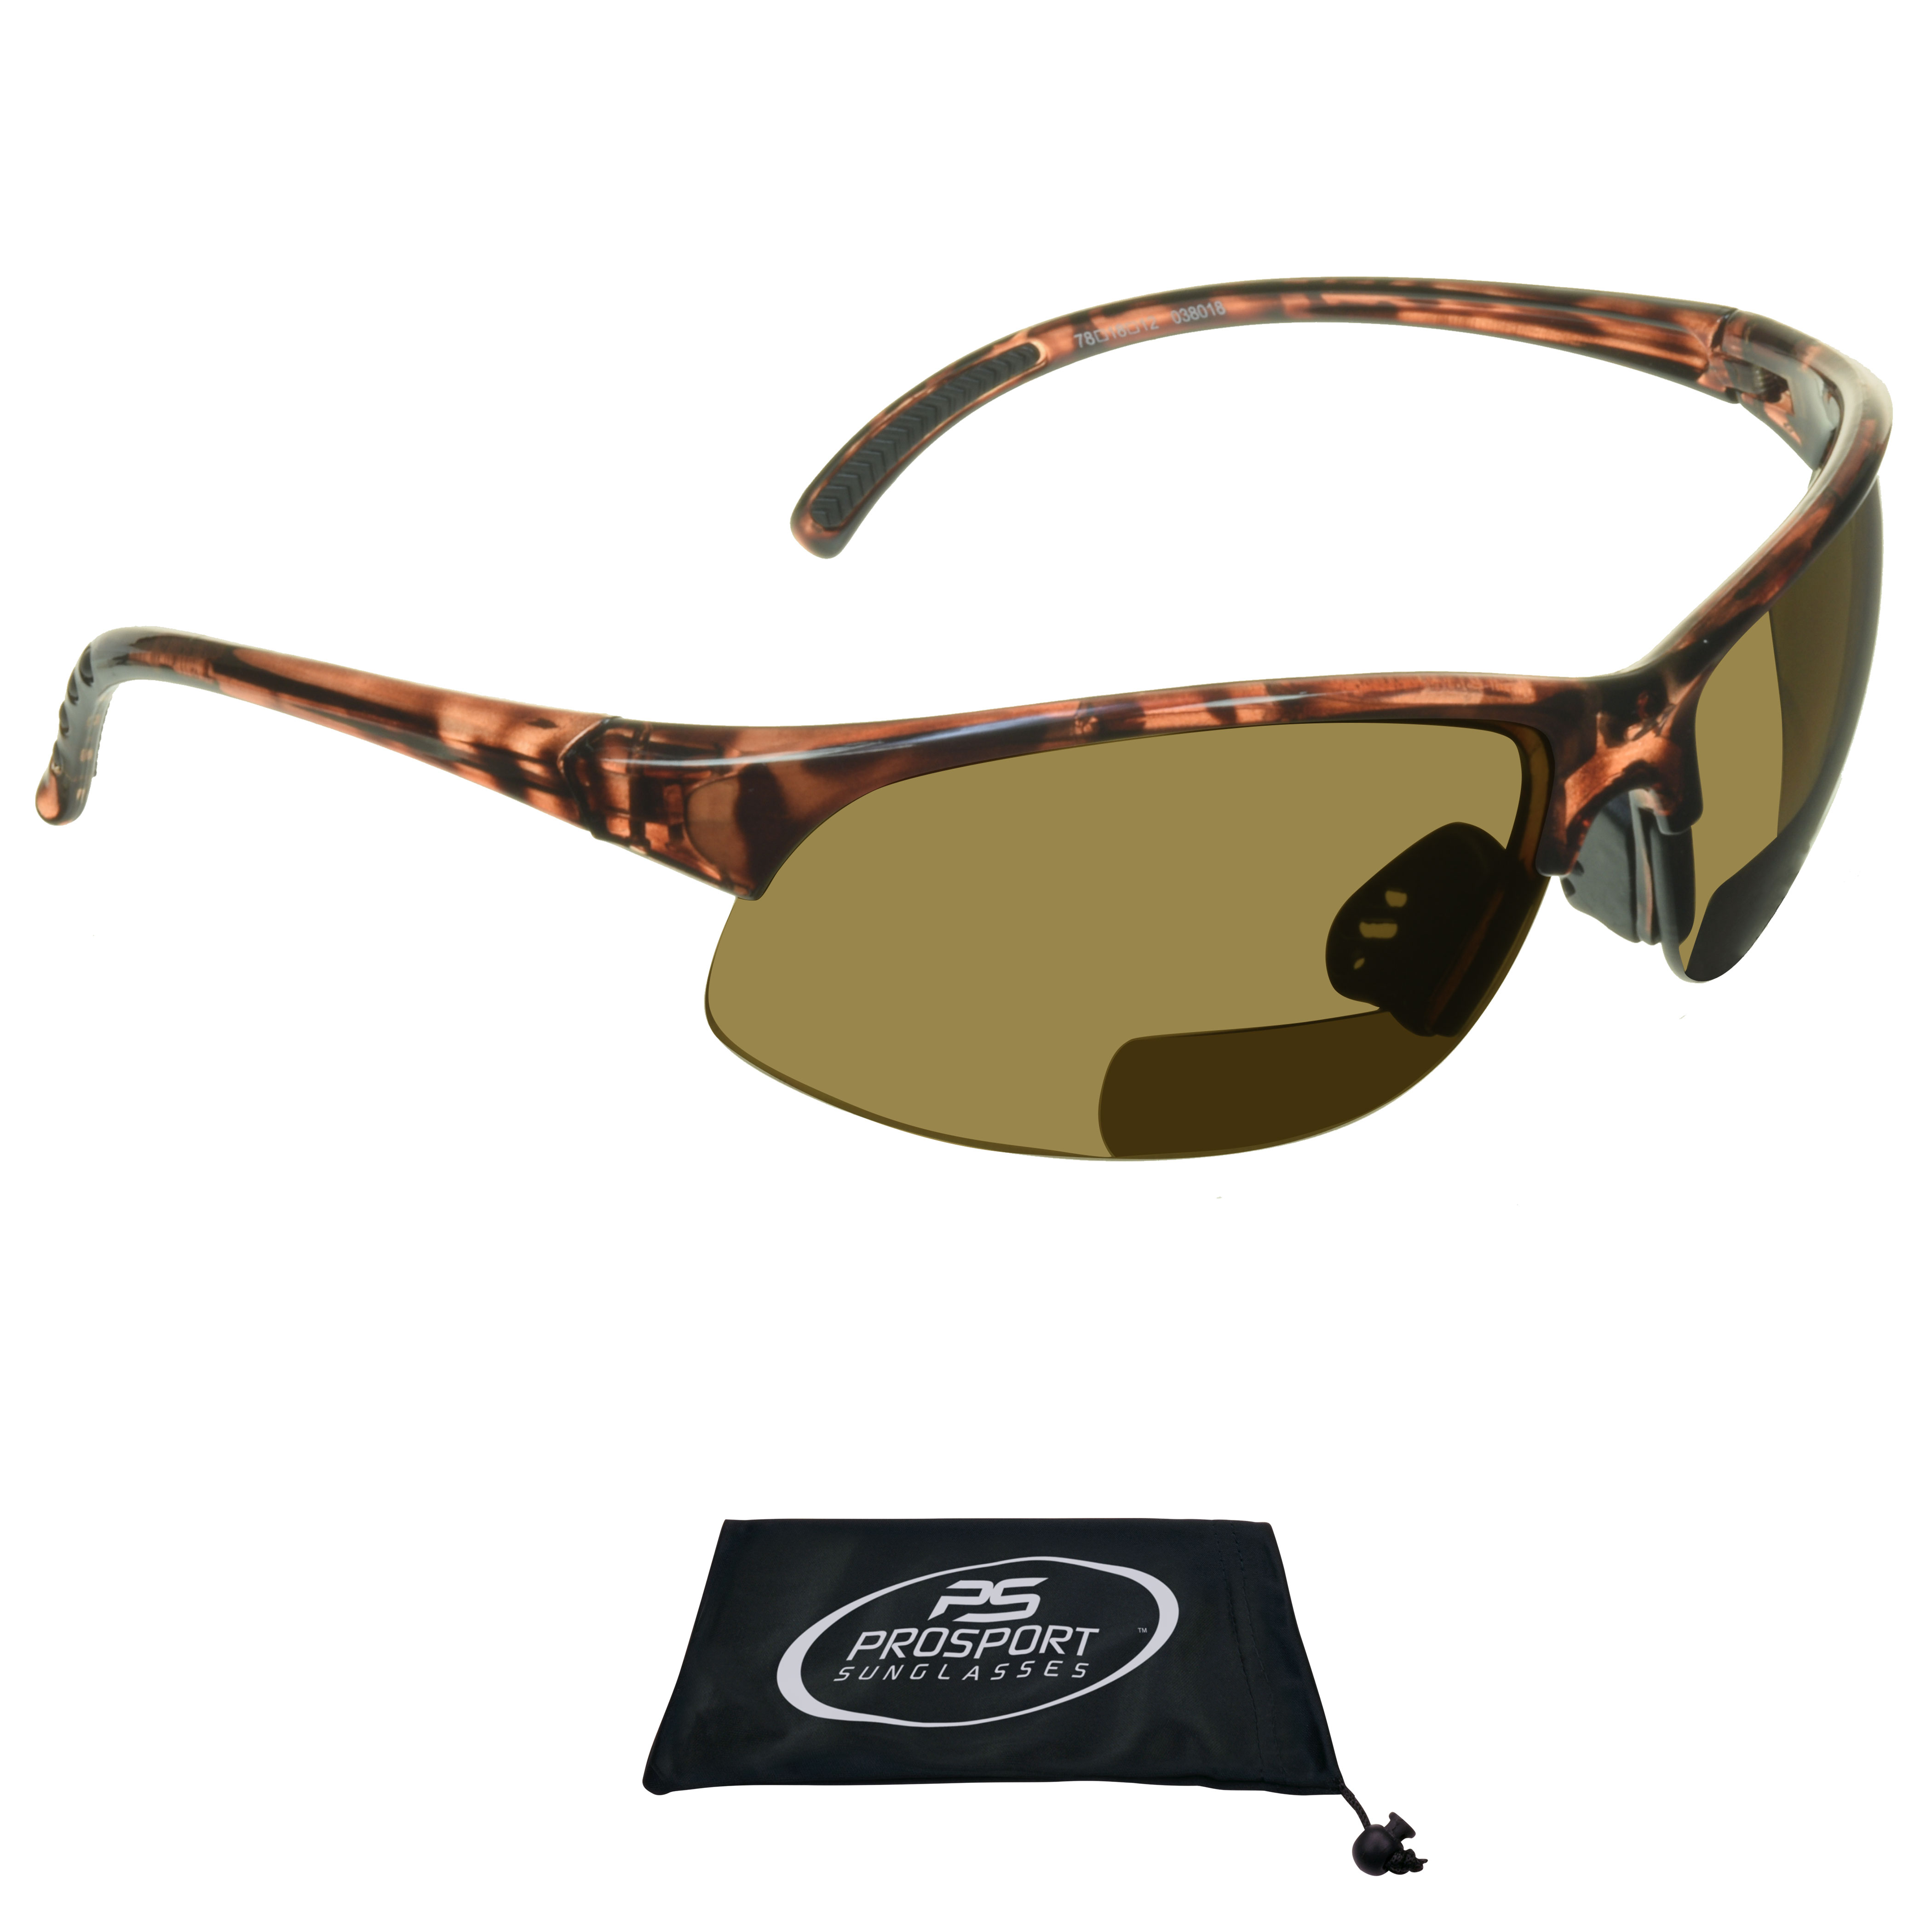 proSPORT Bifocal Reader Sunglasses 1.75 Dark Brown Lens Sport Wrap Polycarbonate Lens Golf Cycling Driving Running Tennis Motorcycle Men Women - image 1 of 5